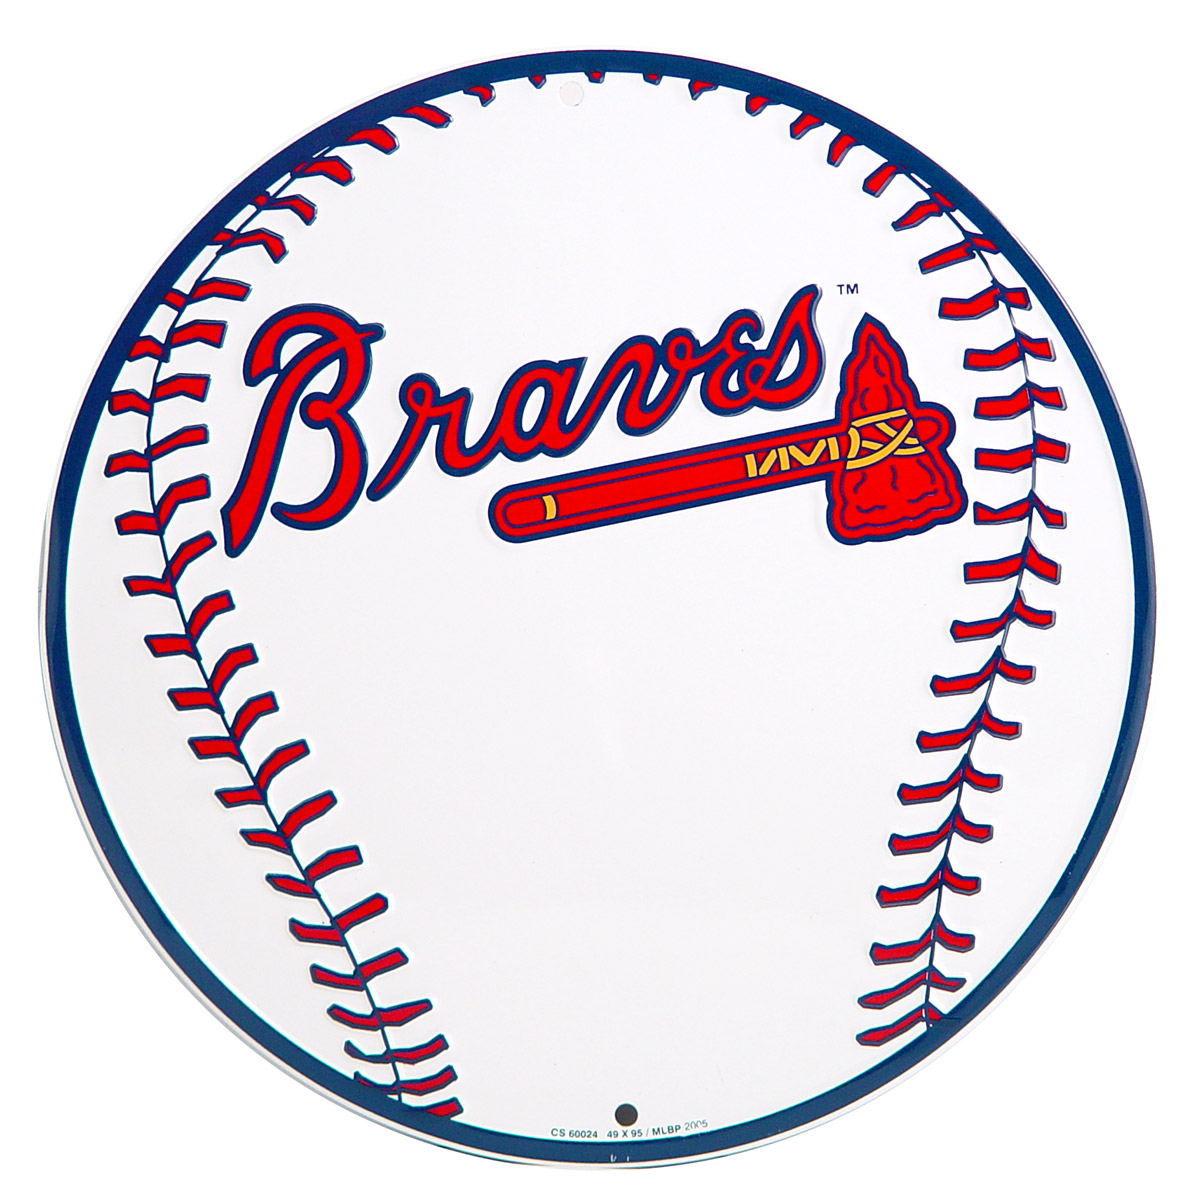 Atlanta Braves Logo Images | Free download on ClipArtMag